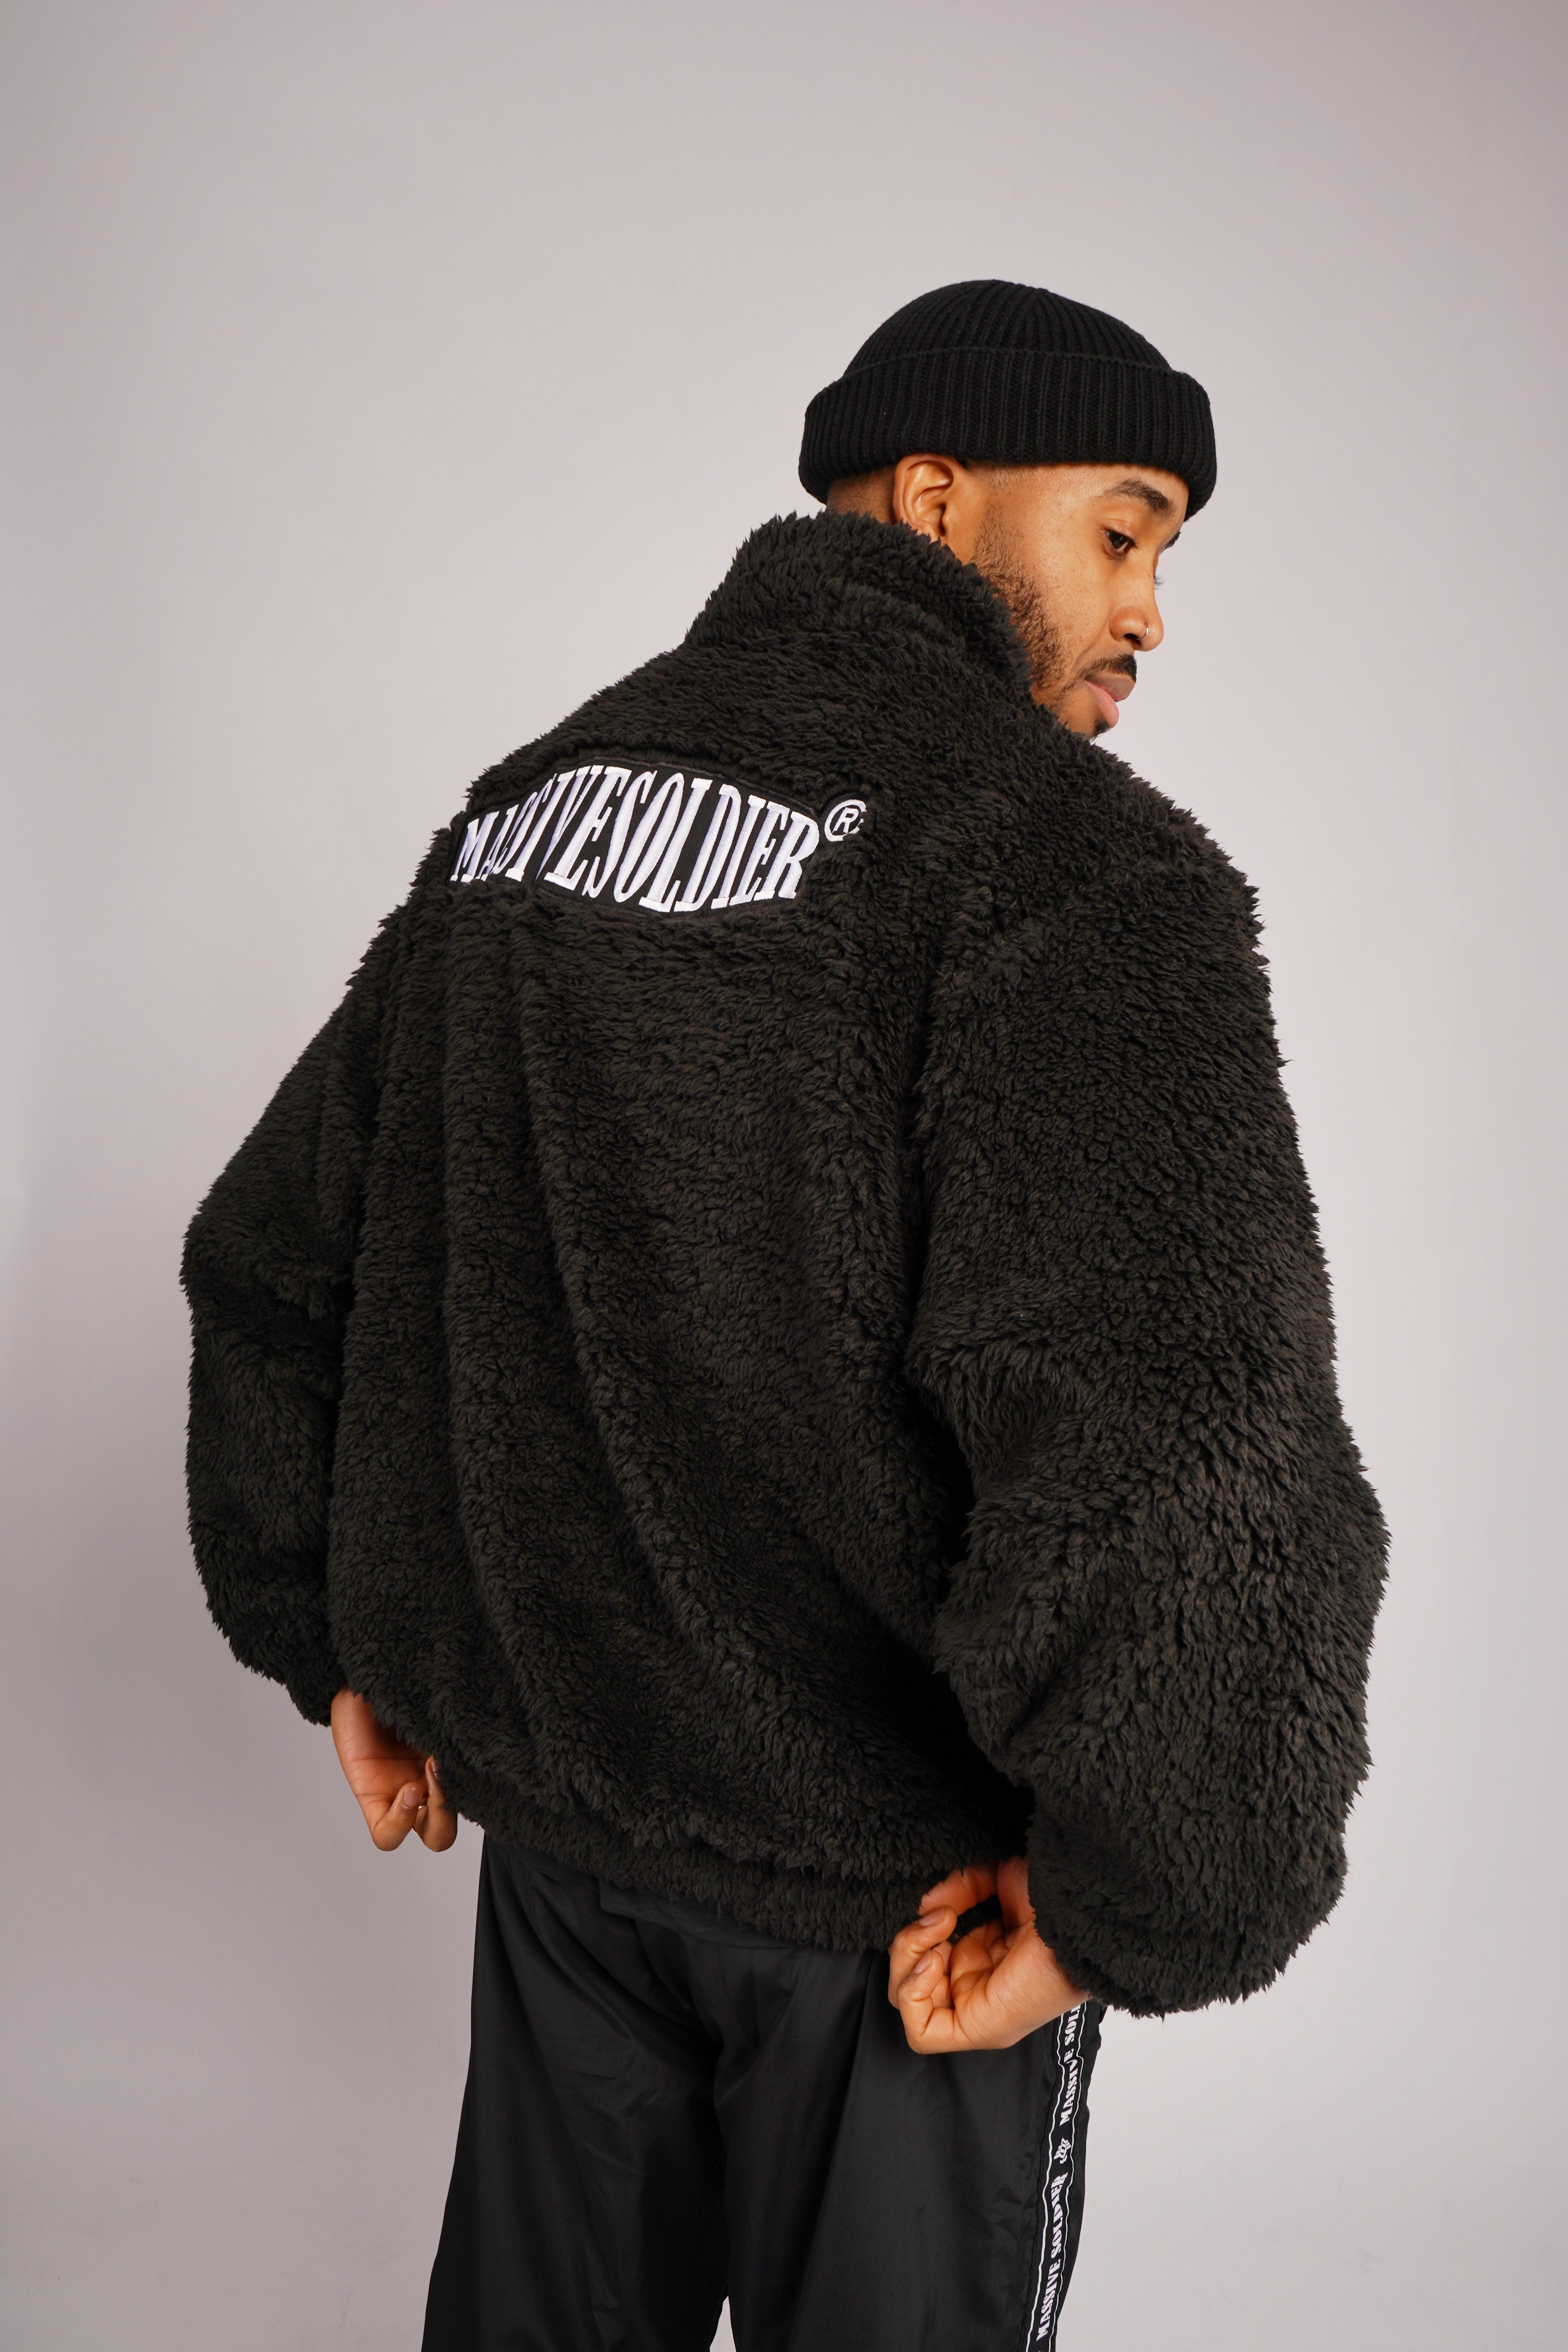 Massive Fleece Sweater